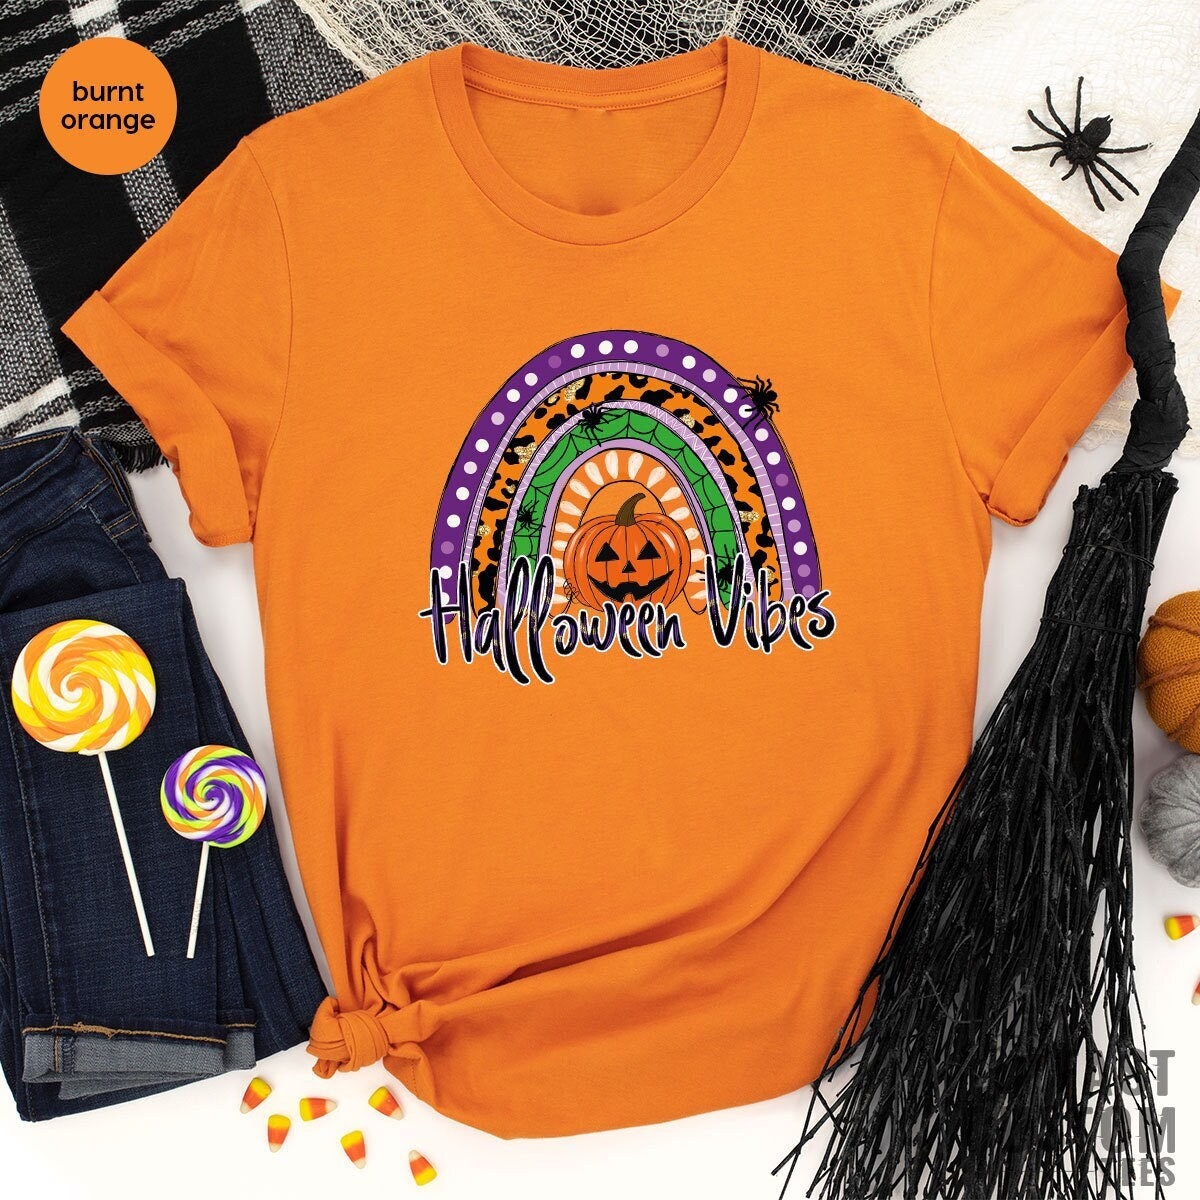 Halloween Vibes Shirt, Rainbow Fall T Shirt, Spooky T-Shirt, Funny Halloween Shirts, Retro Halloween Tshirt, Vintage Autumn Shirt - Fastdeliverytees.com